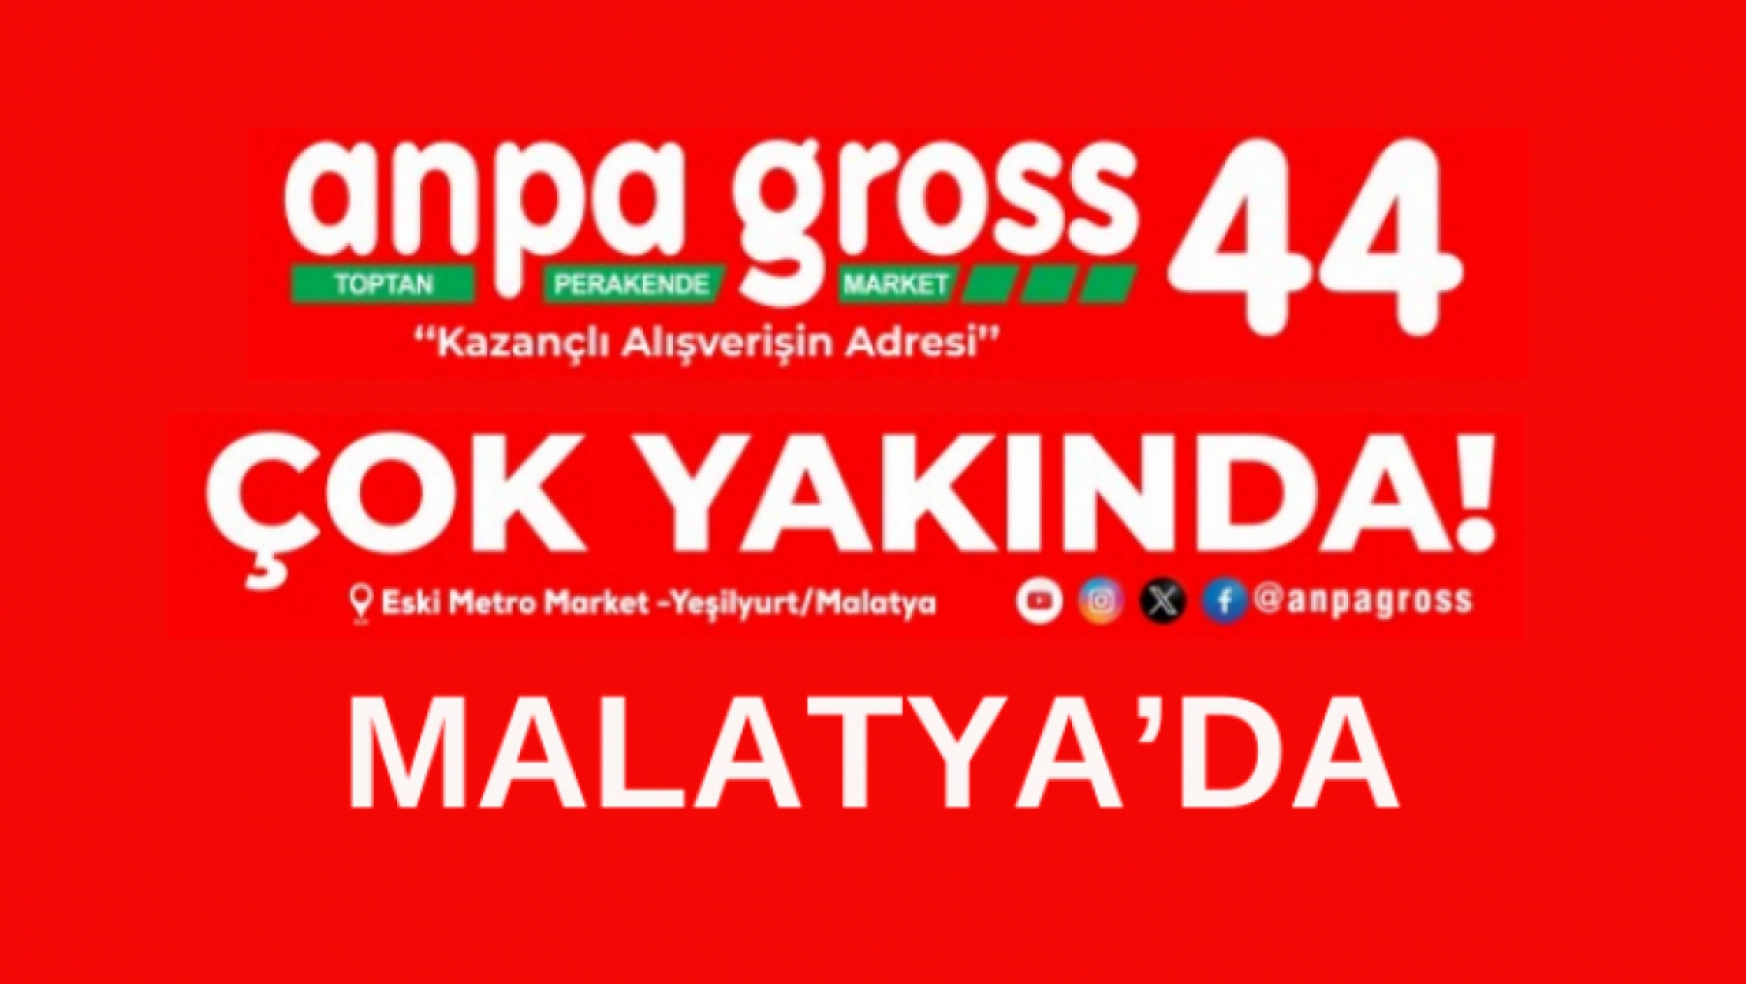 Anpa Gross 44 Malatya'da Açılıyor